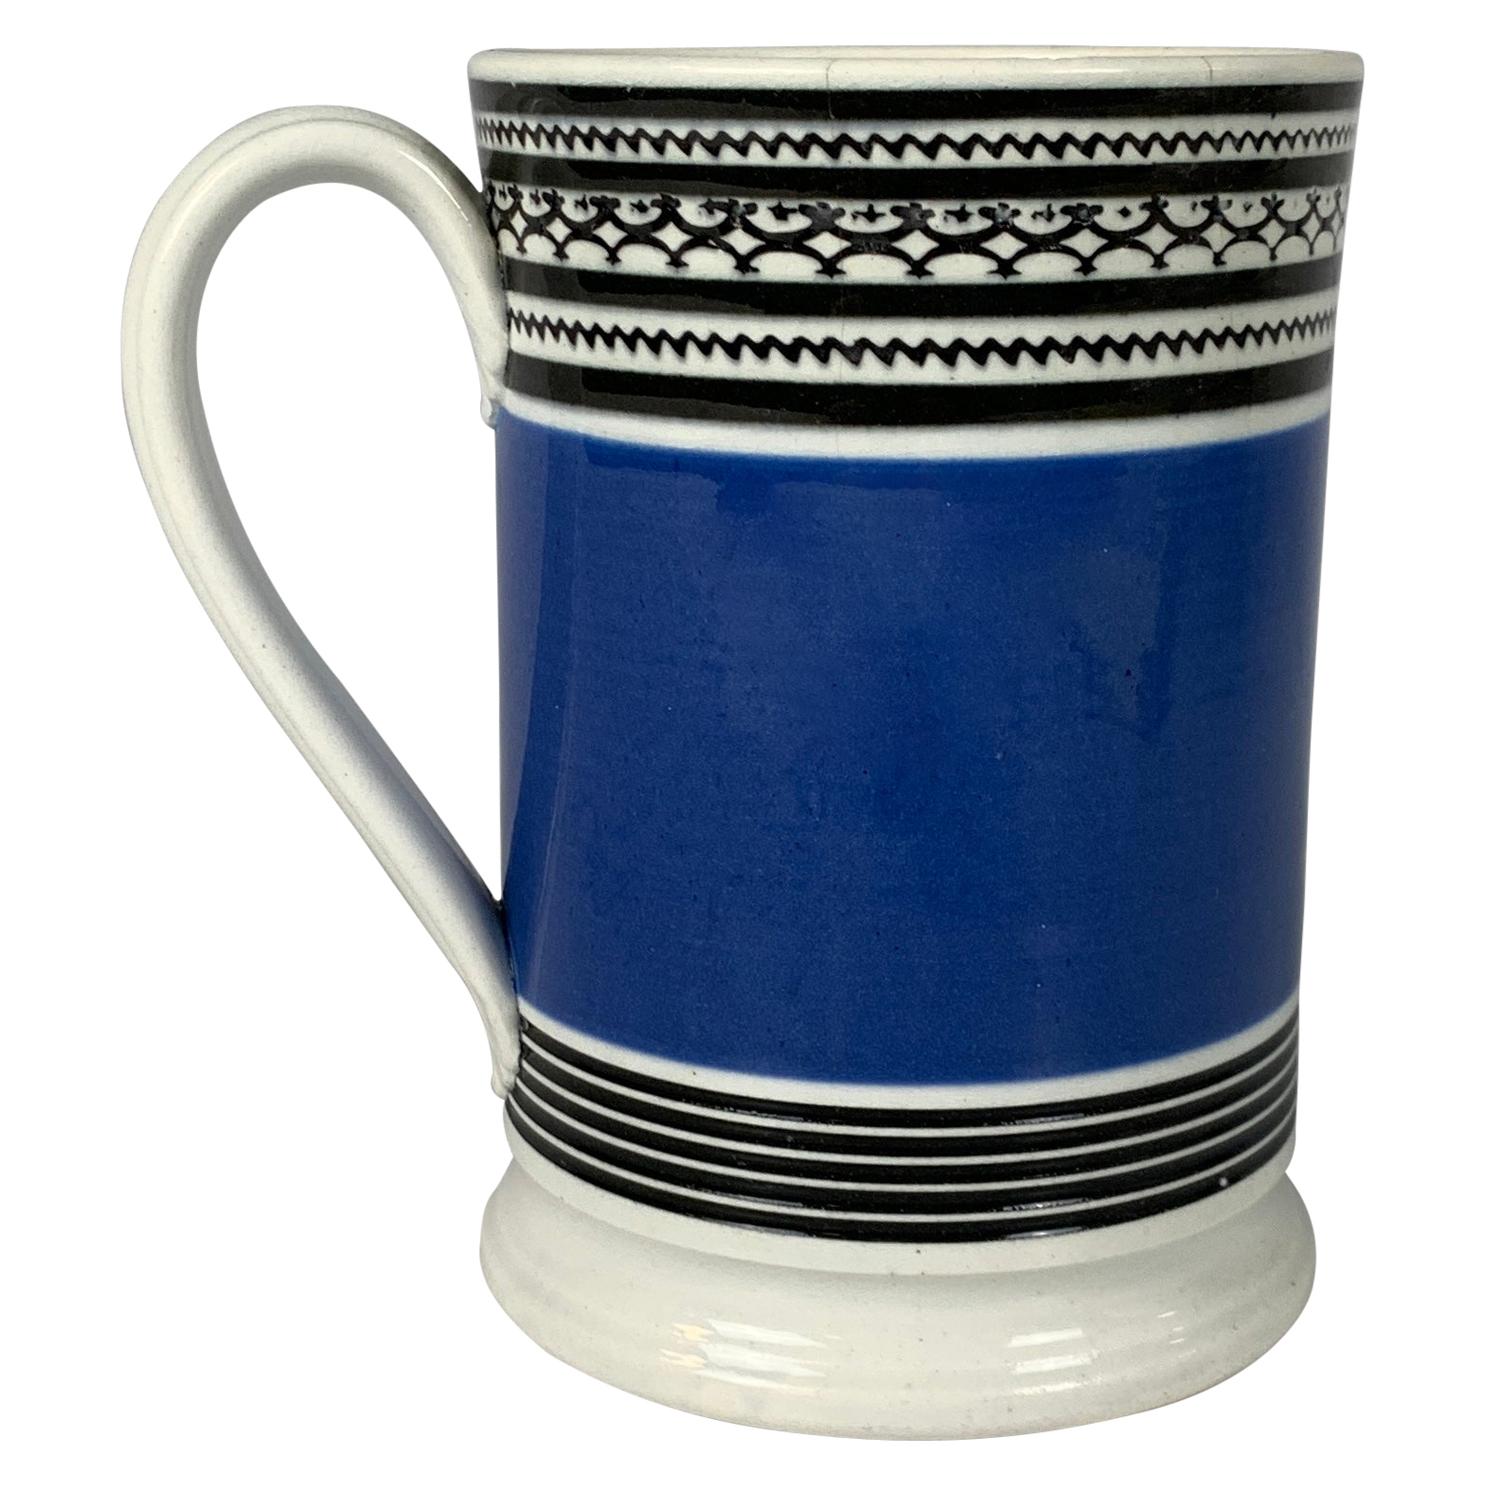 Mochaware Mug with Royal Blue Slip and Black Geometric Designs Made England